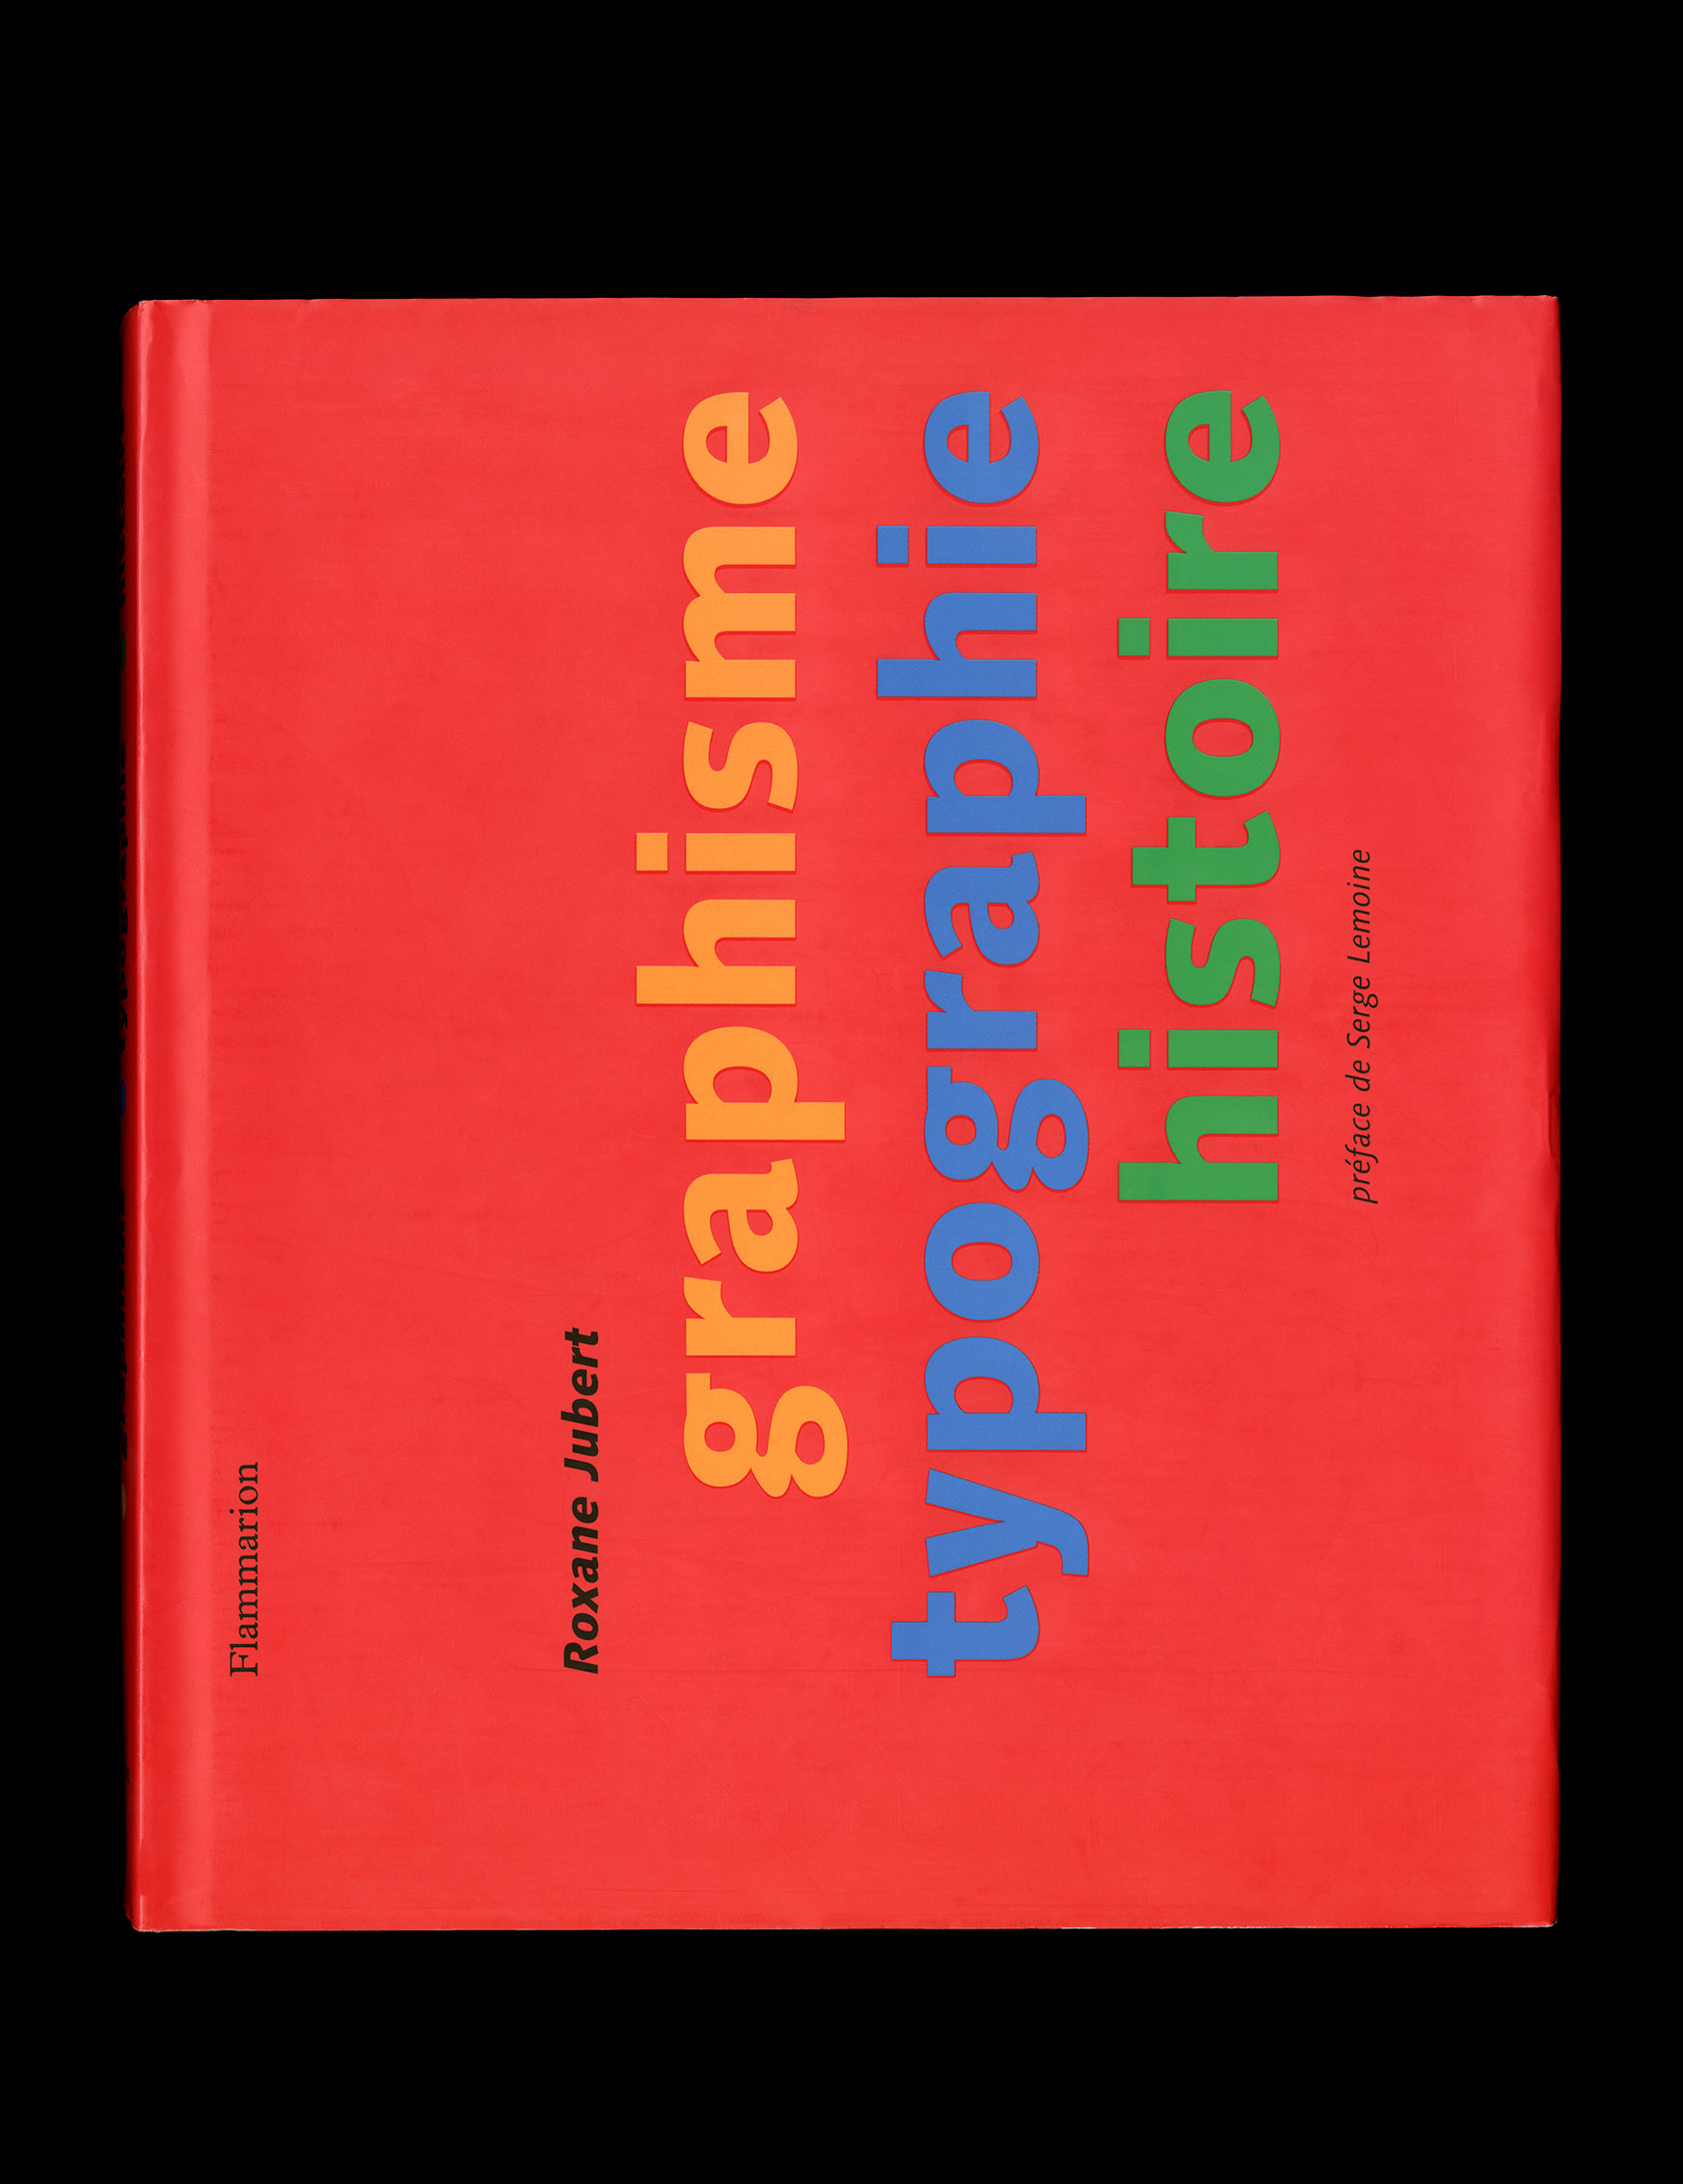 Roxane Jubert, Graphisme, Typographie, Histoire, Paris, Editions Flammarion, 2005